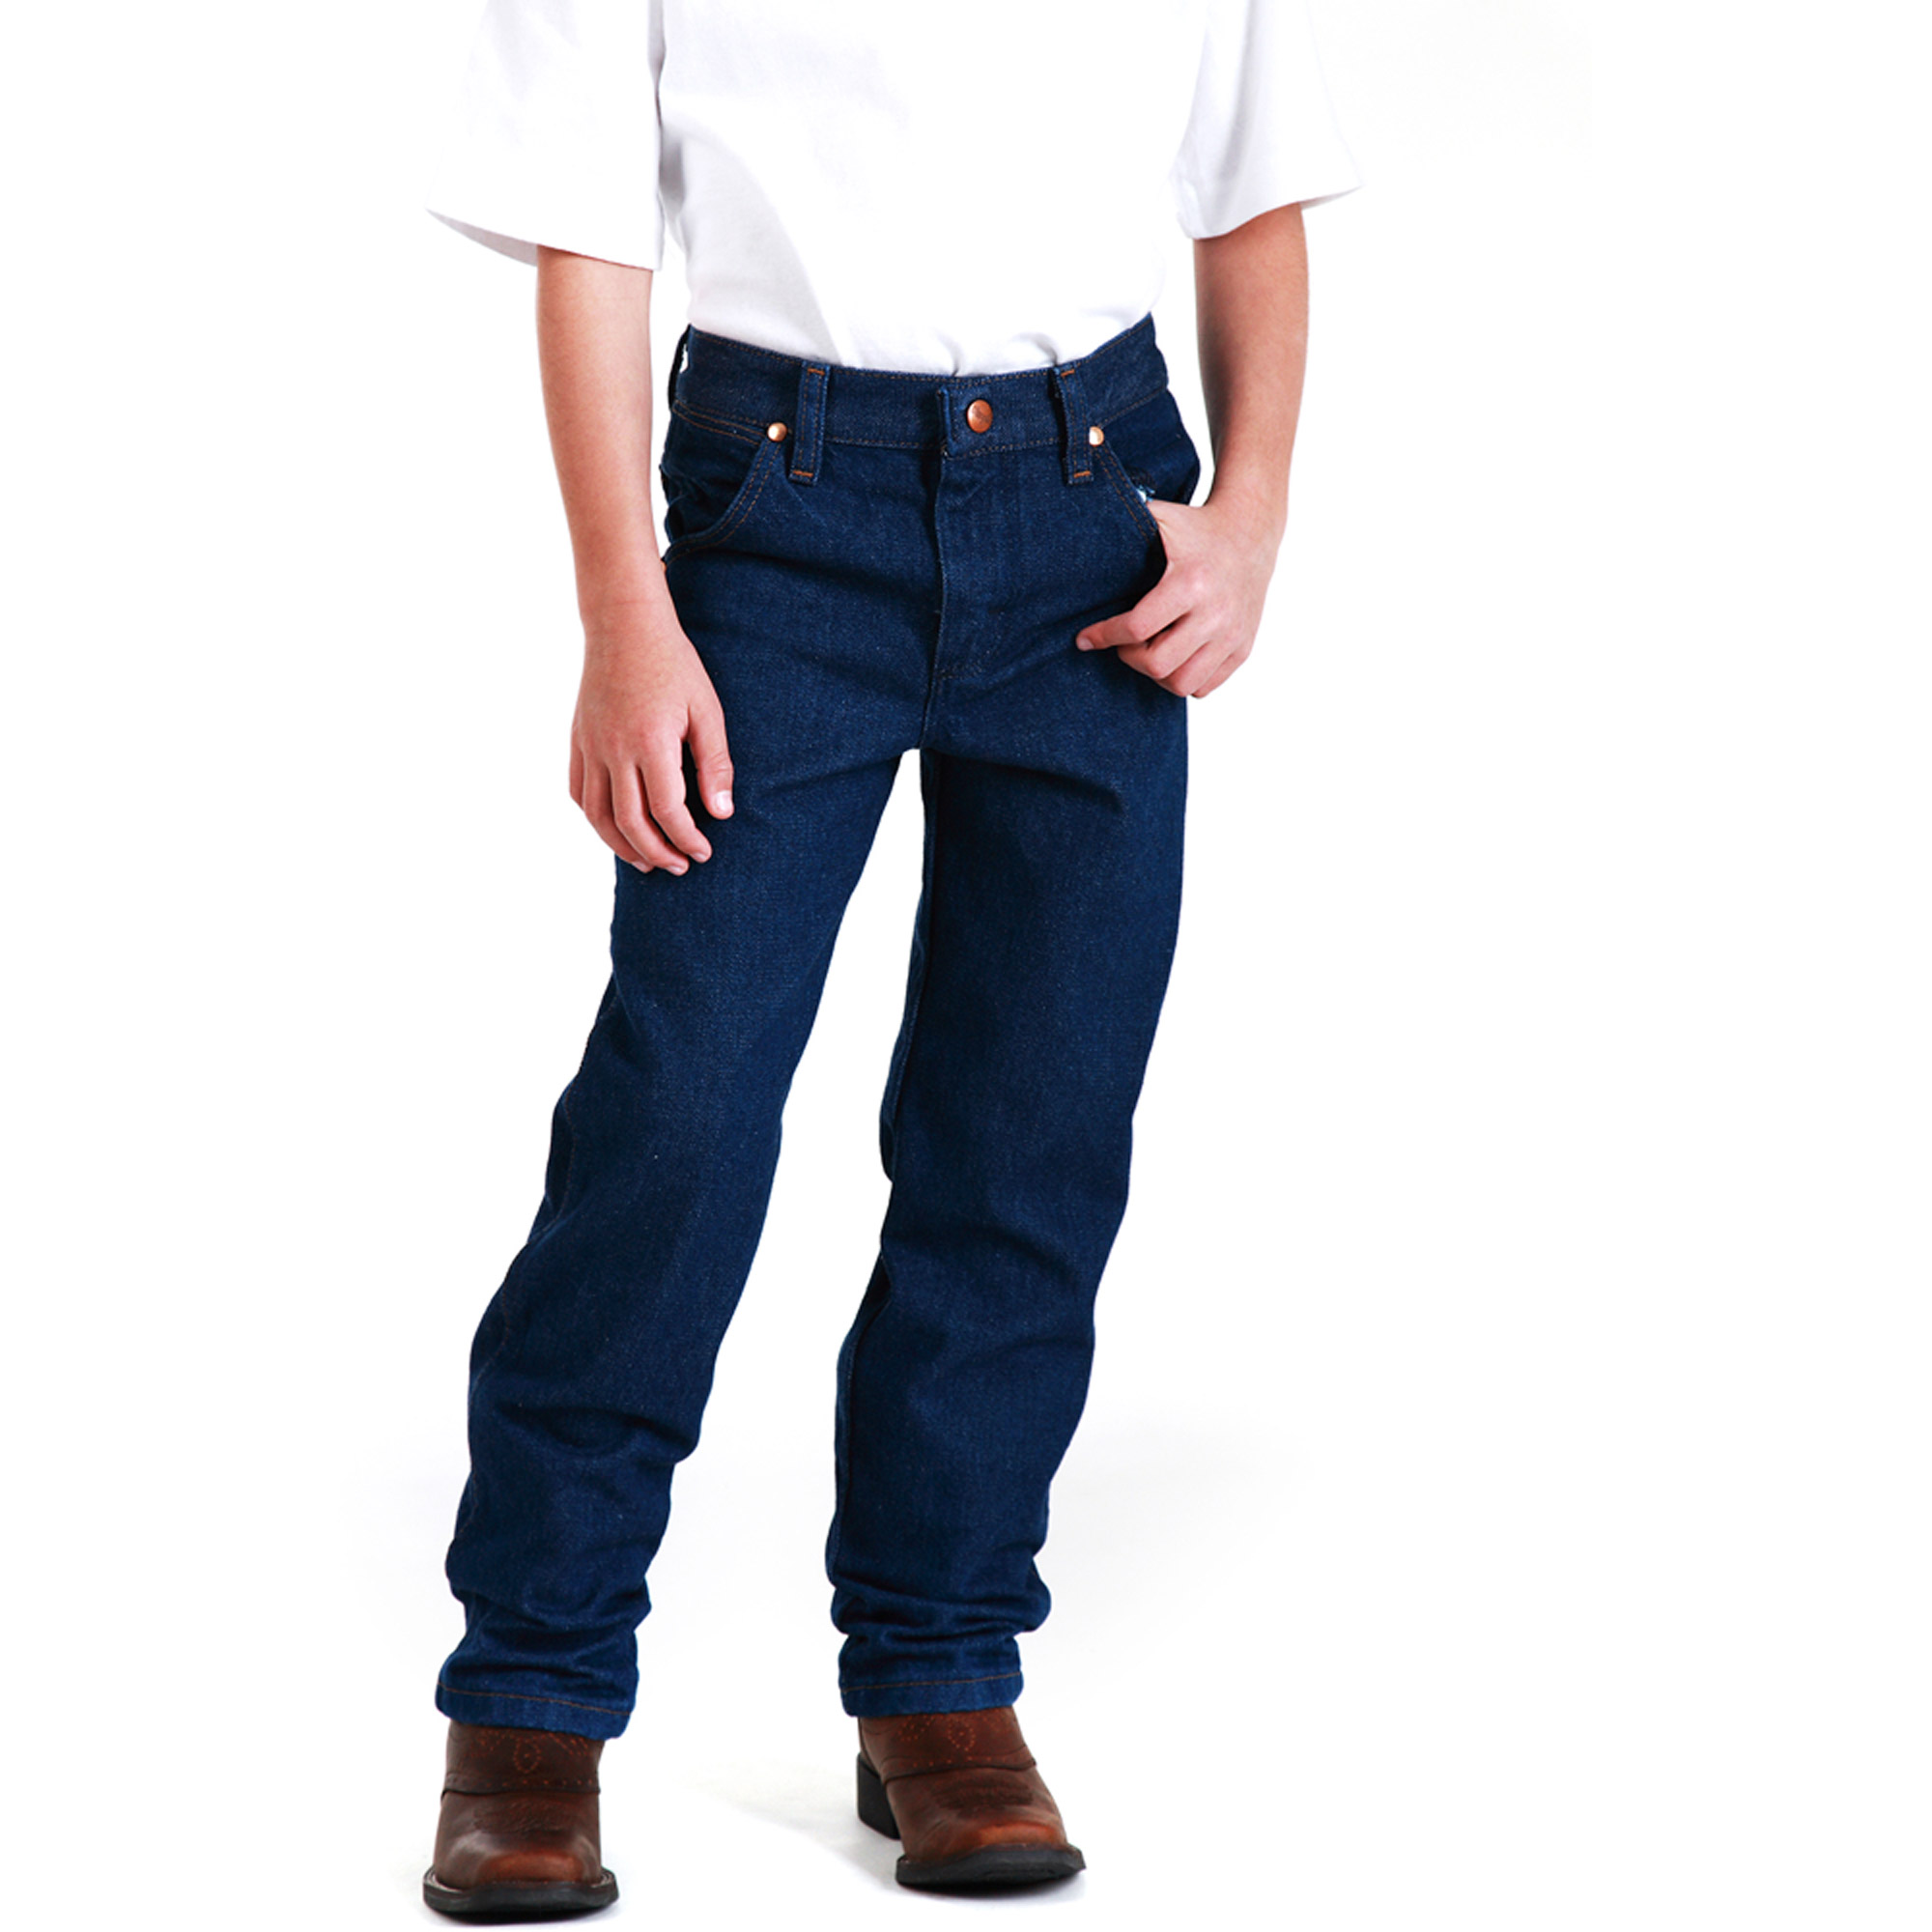 Wrangler Boys Cowboy Cut Original Fit Jeans, Sizes 4-7 - image 1 of 4